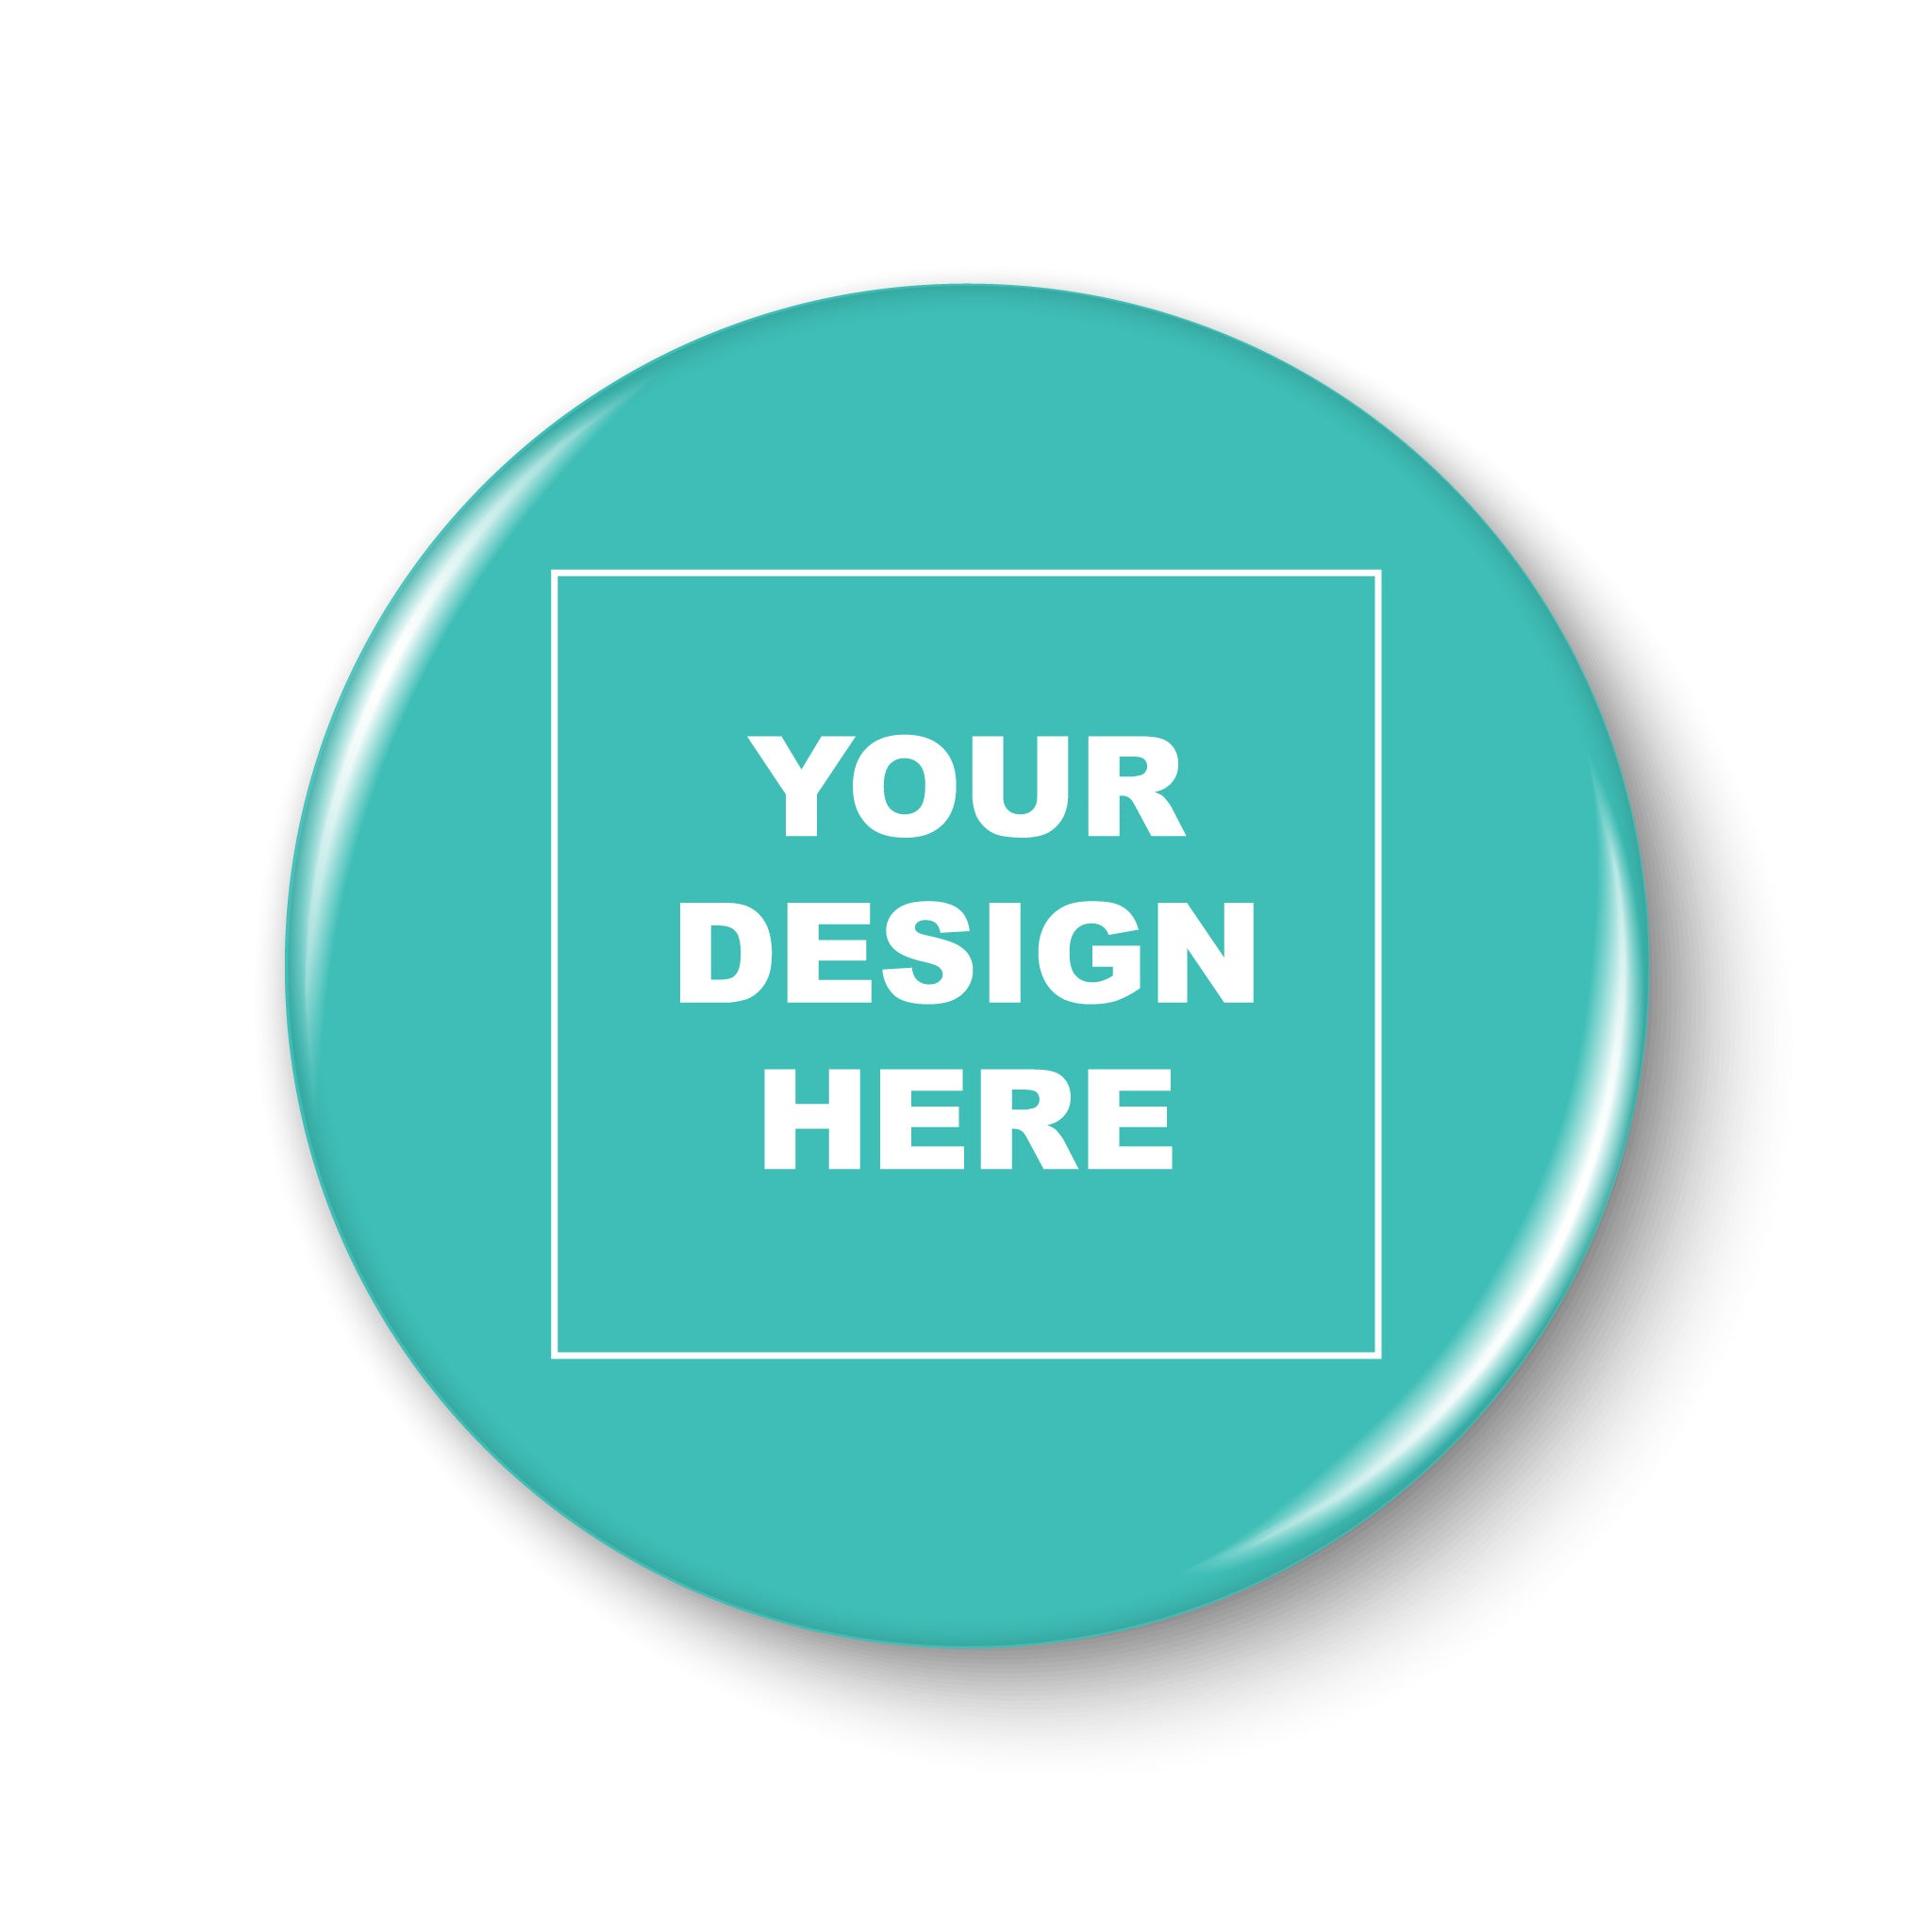 Design Your Own Button